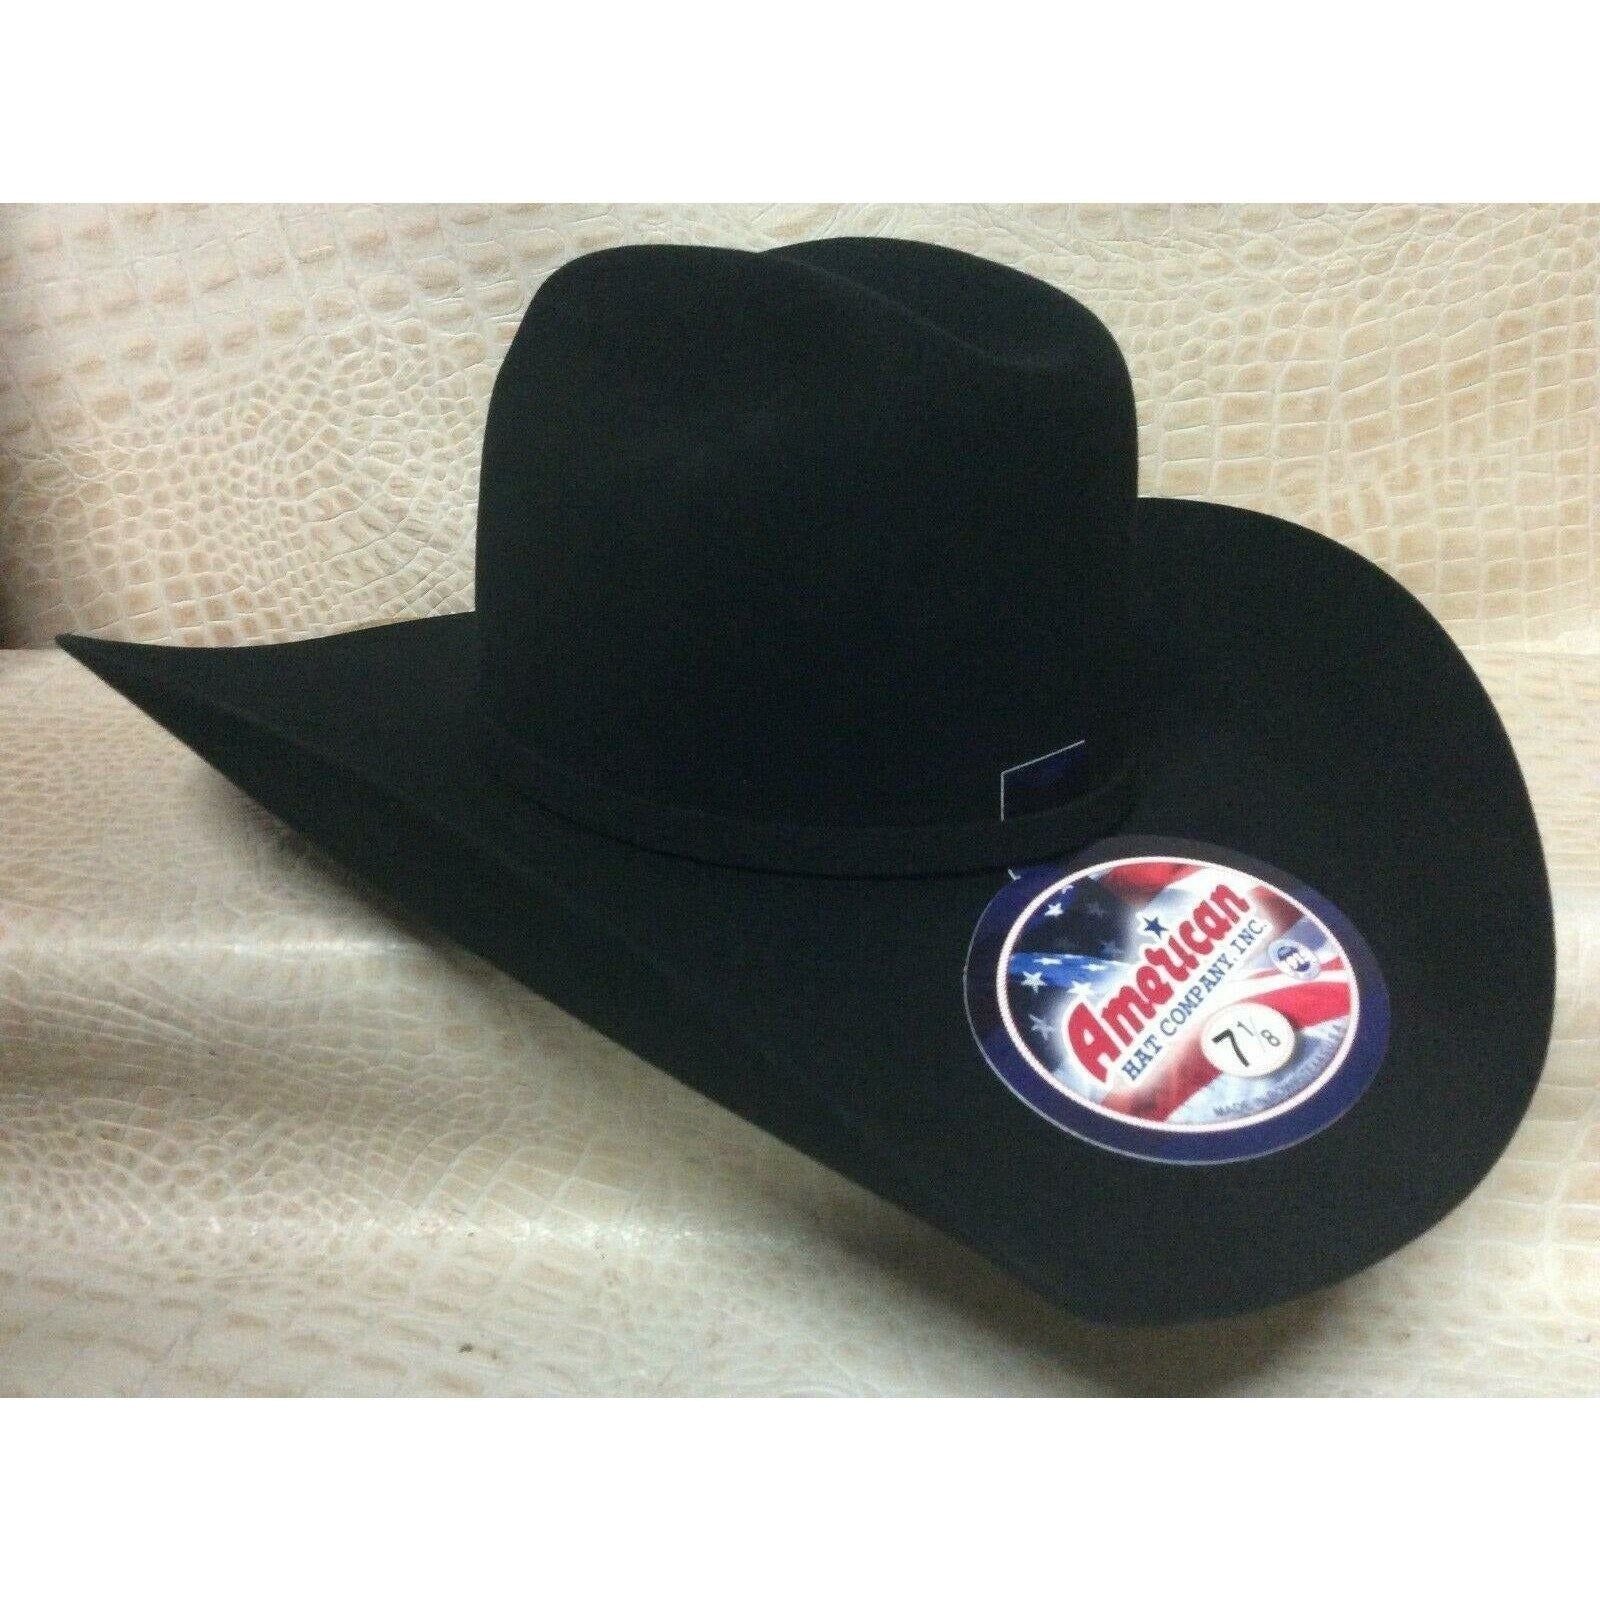 American Hat Co. Black 7X Beaver Fur Felt Cowboy Hat Western Rodeo Stetson - CWesternwear